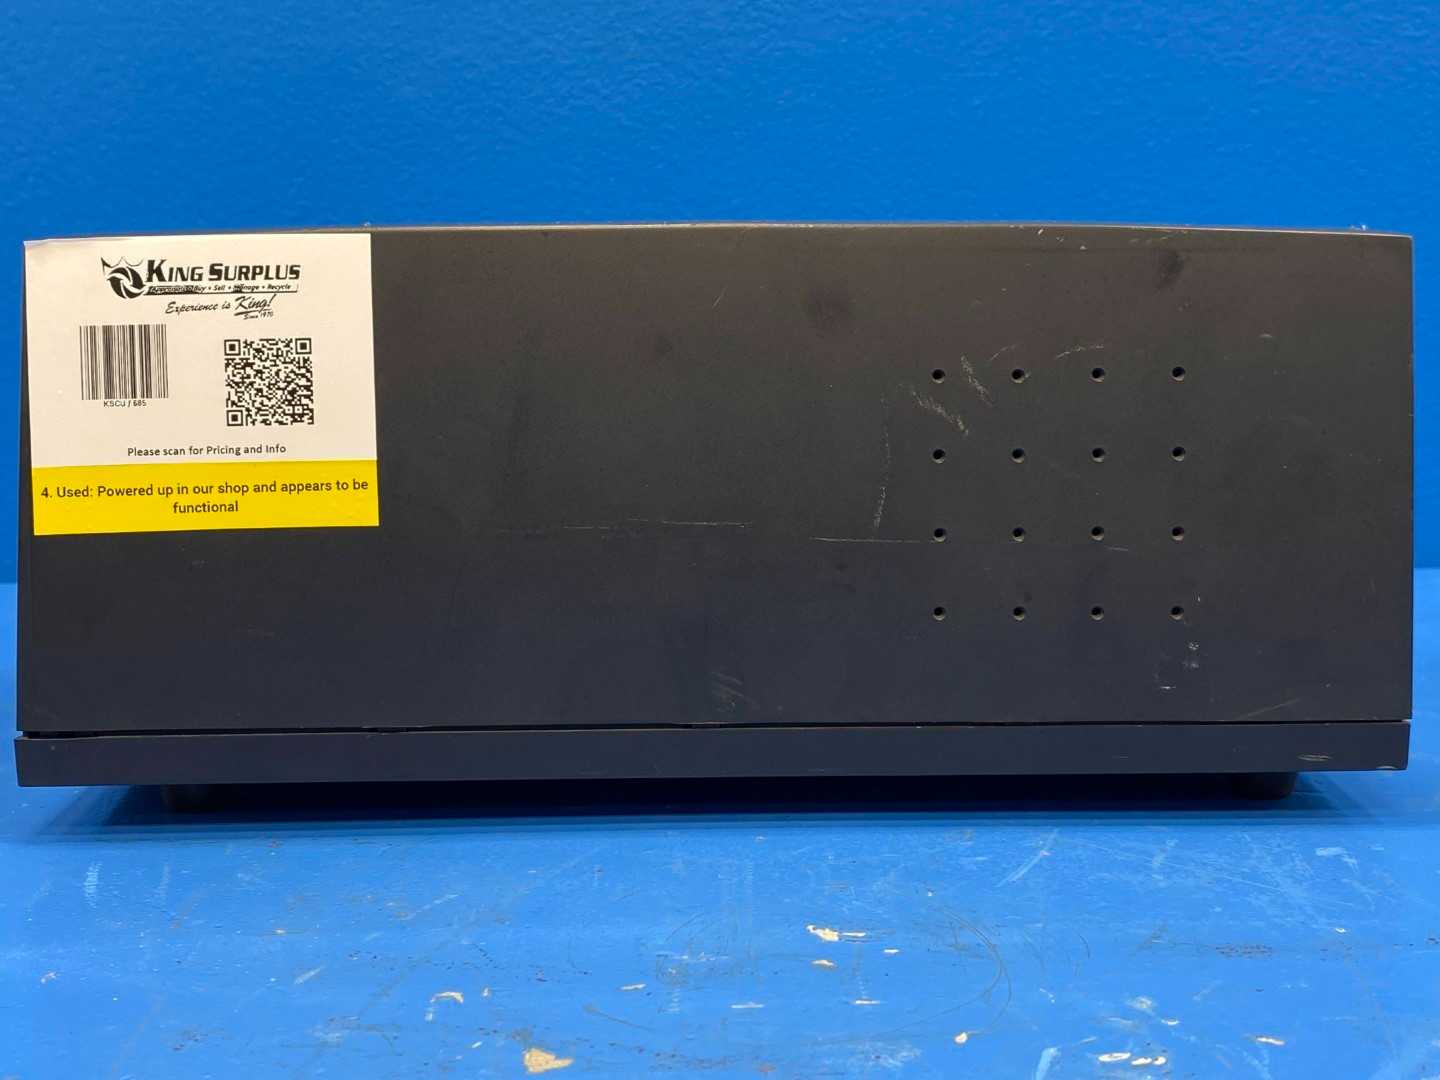 Polaroid  SPRINTSCAN Scanner Model: CS-4000